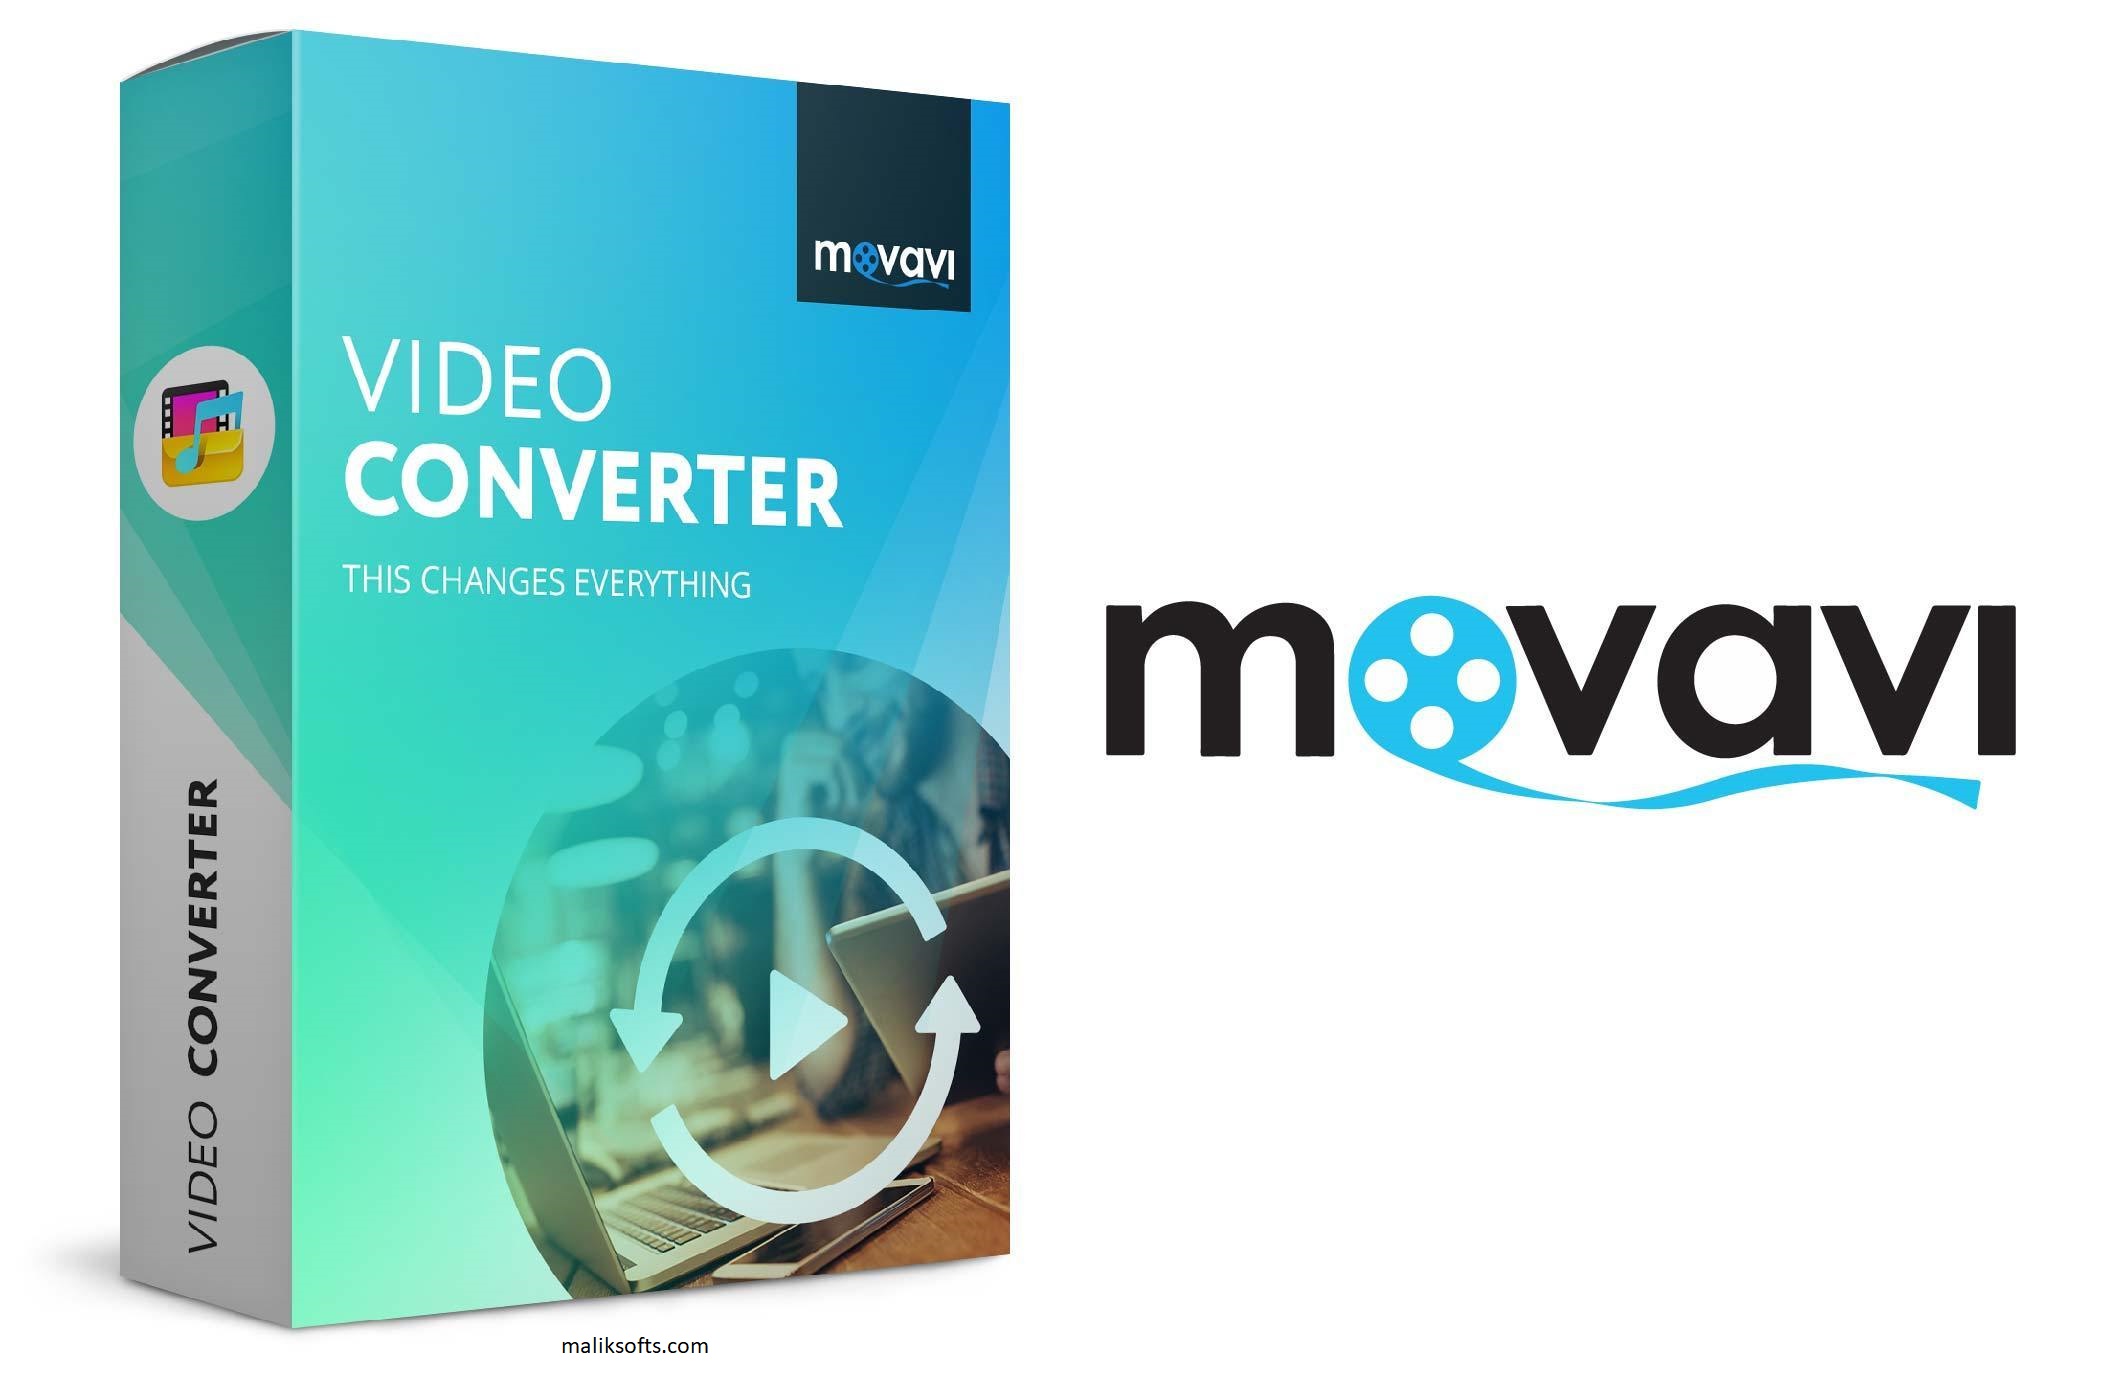 movavi video converter cracked download